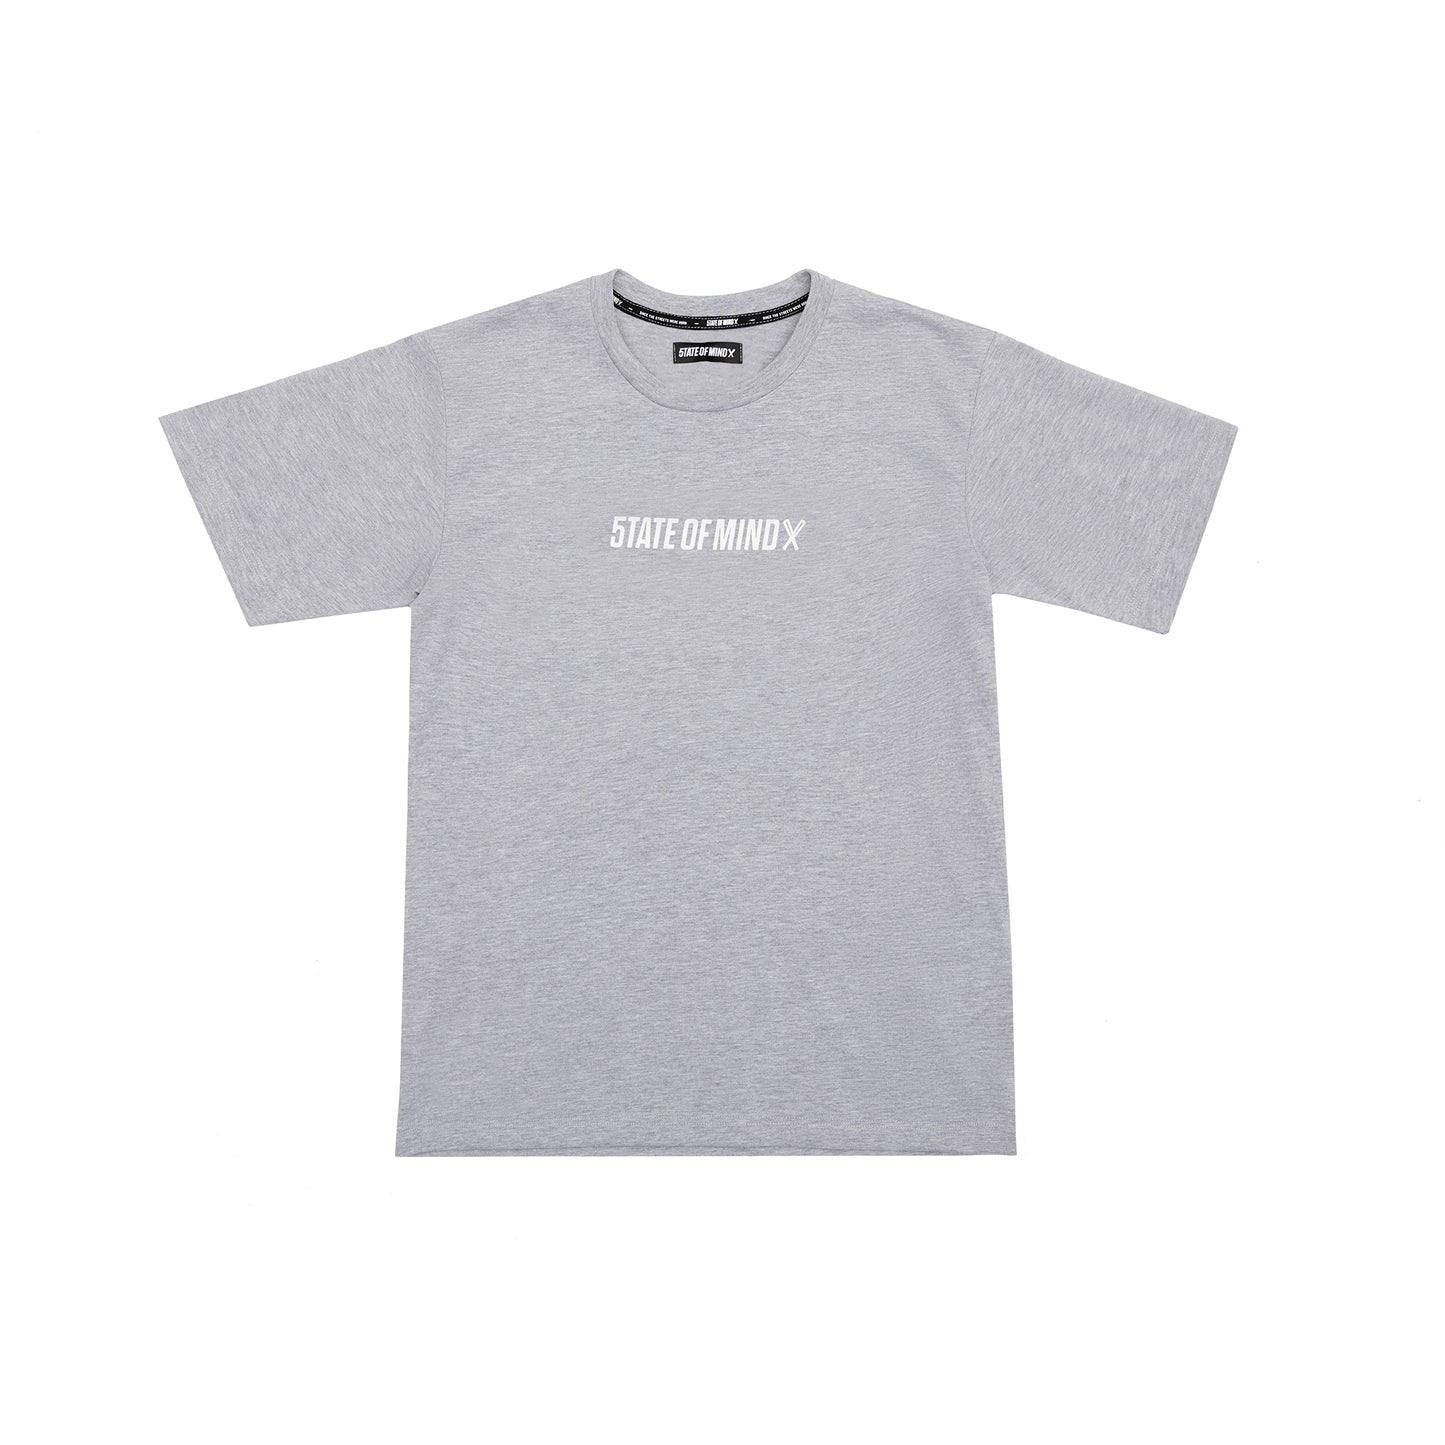 "BOX LOGO" t-shirt sport grey